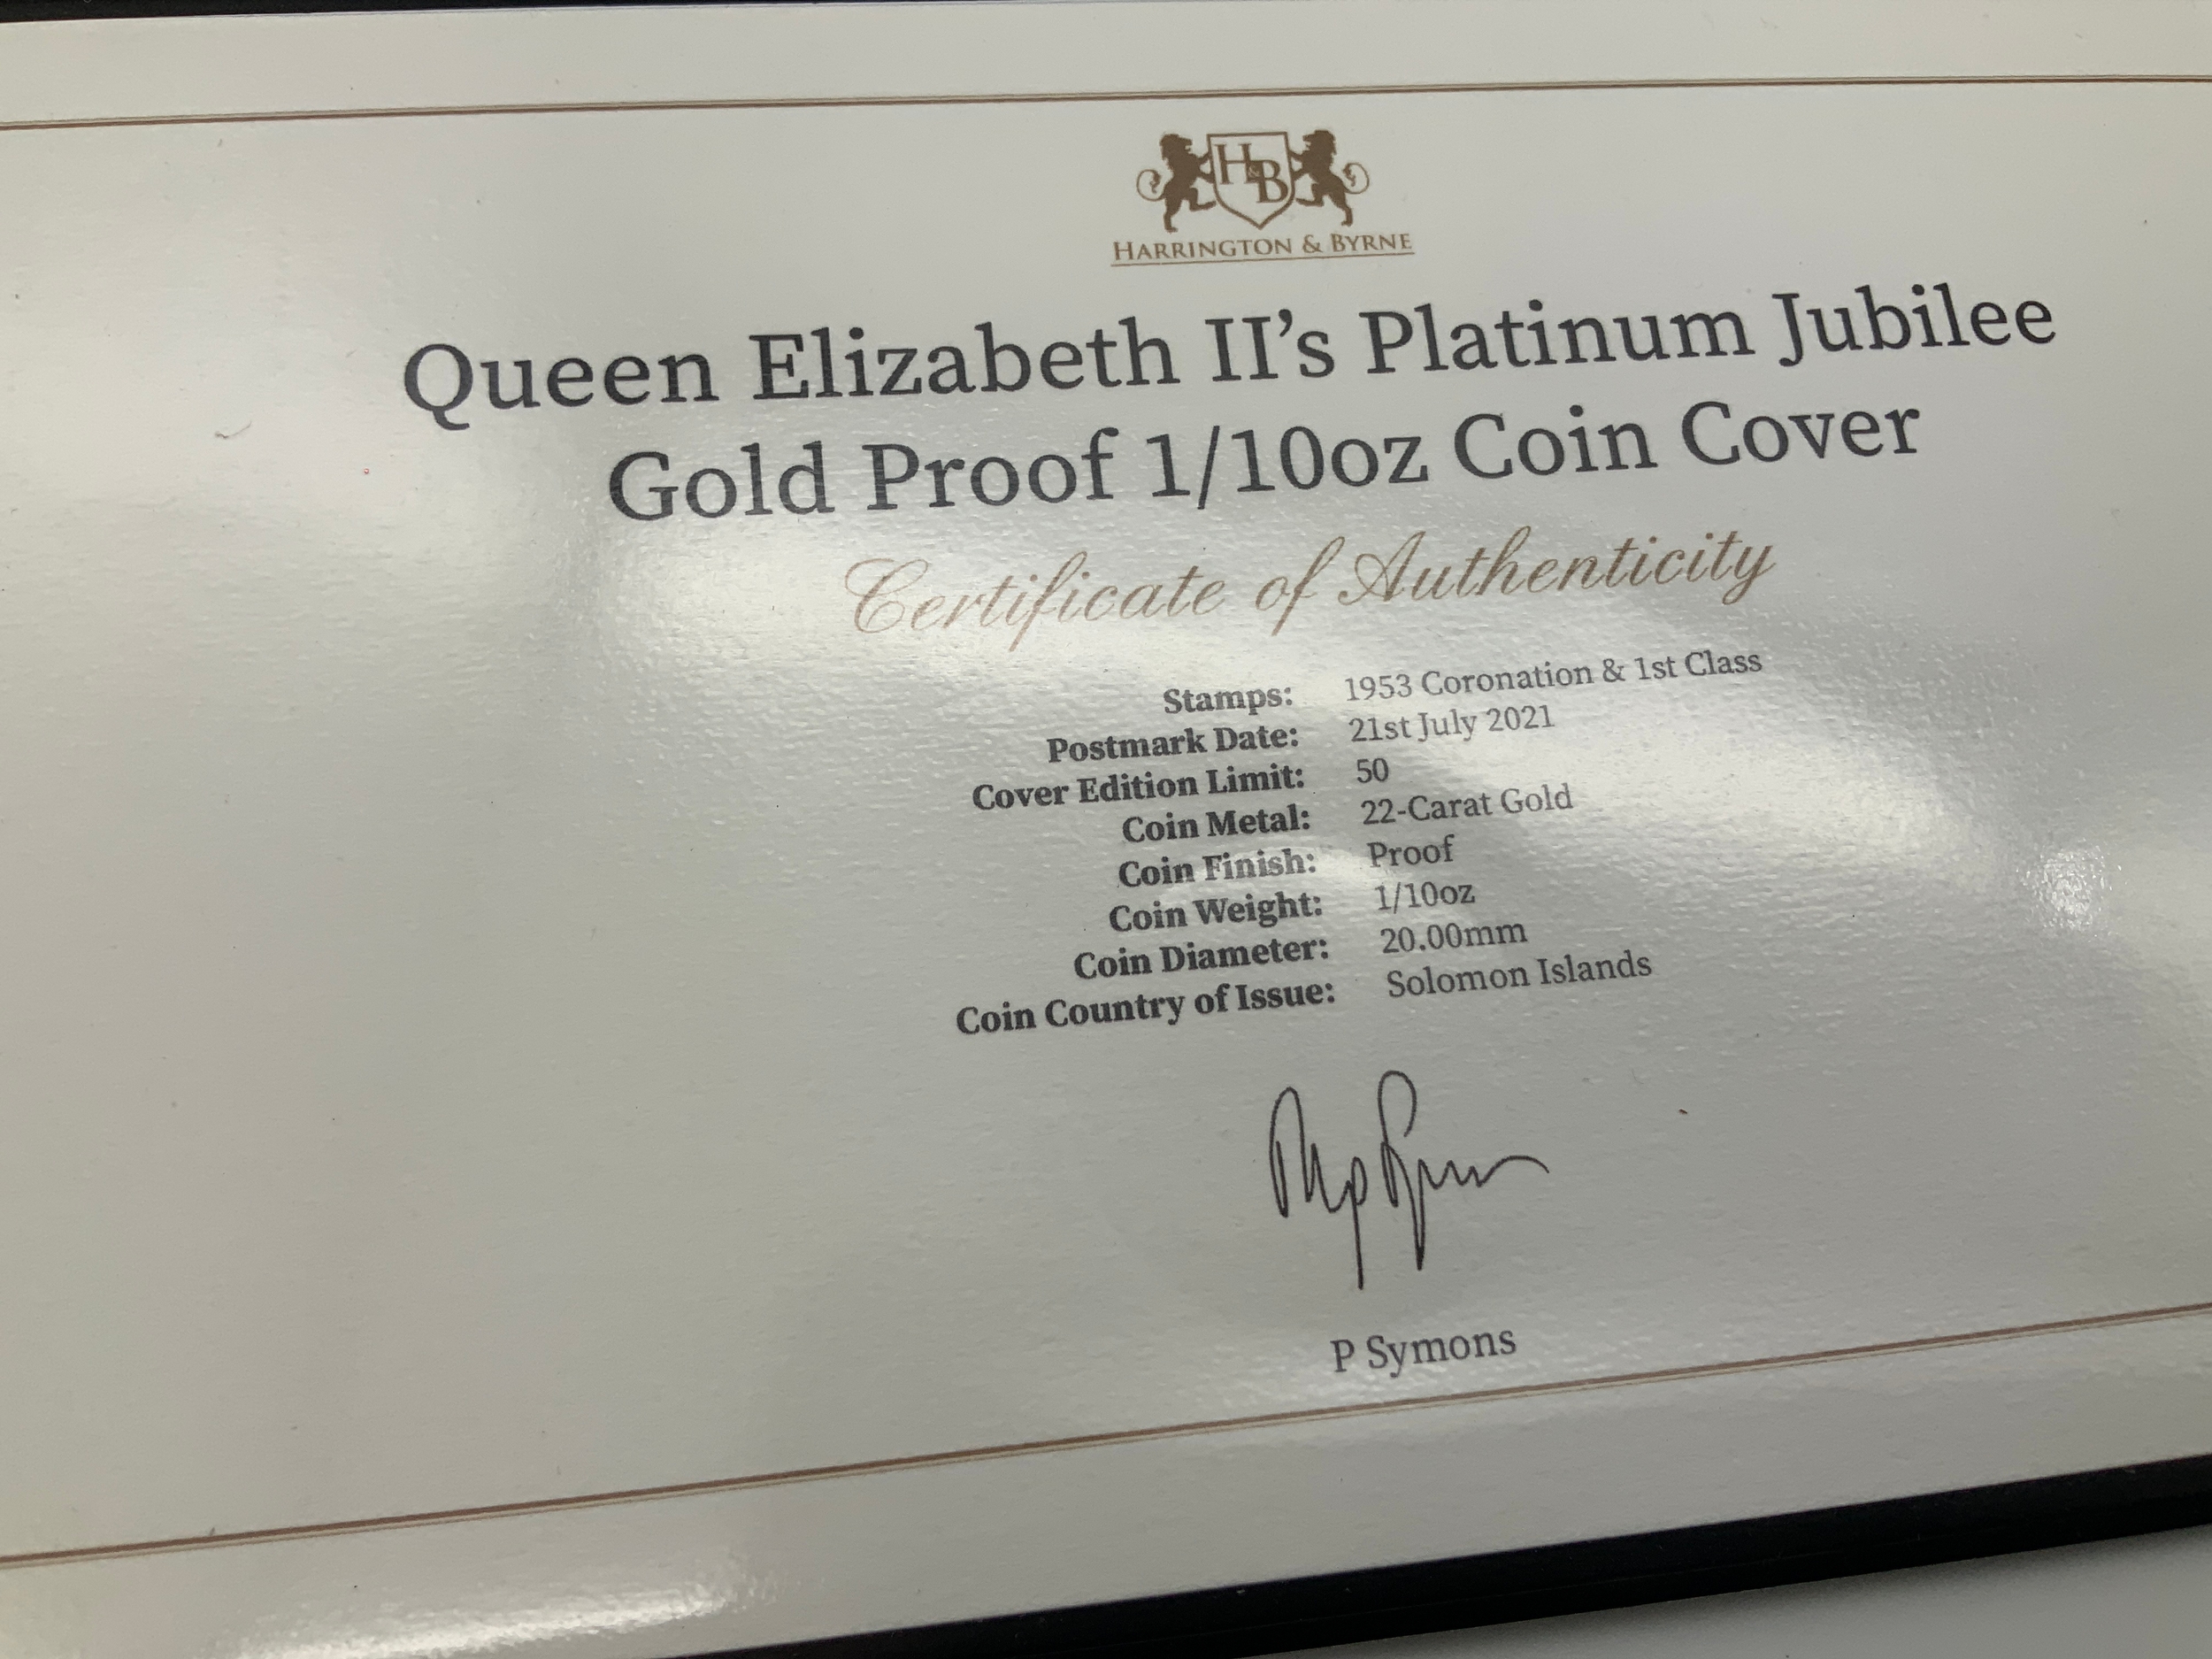 Gold Proof Coin Cover - Queen Elizabeth II's Platinum Jubilee - Image 2 of 2